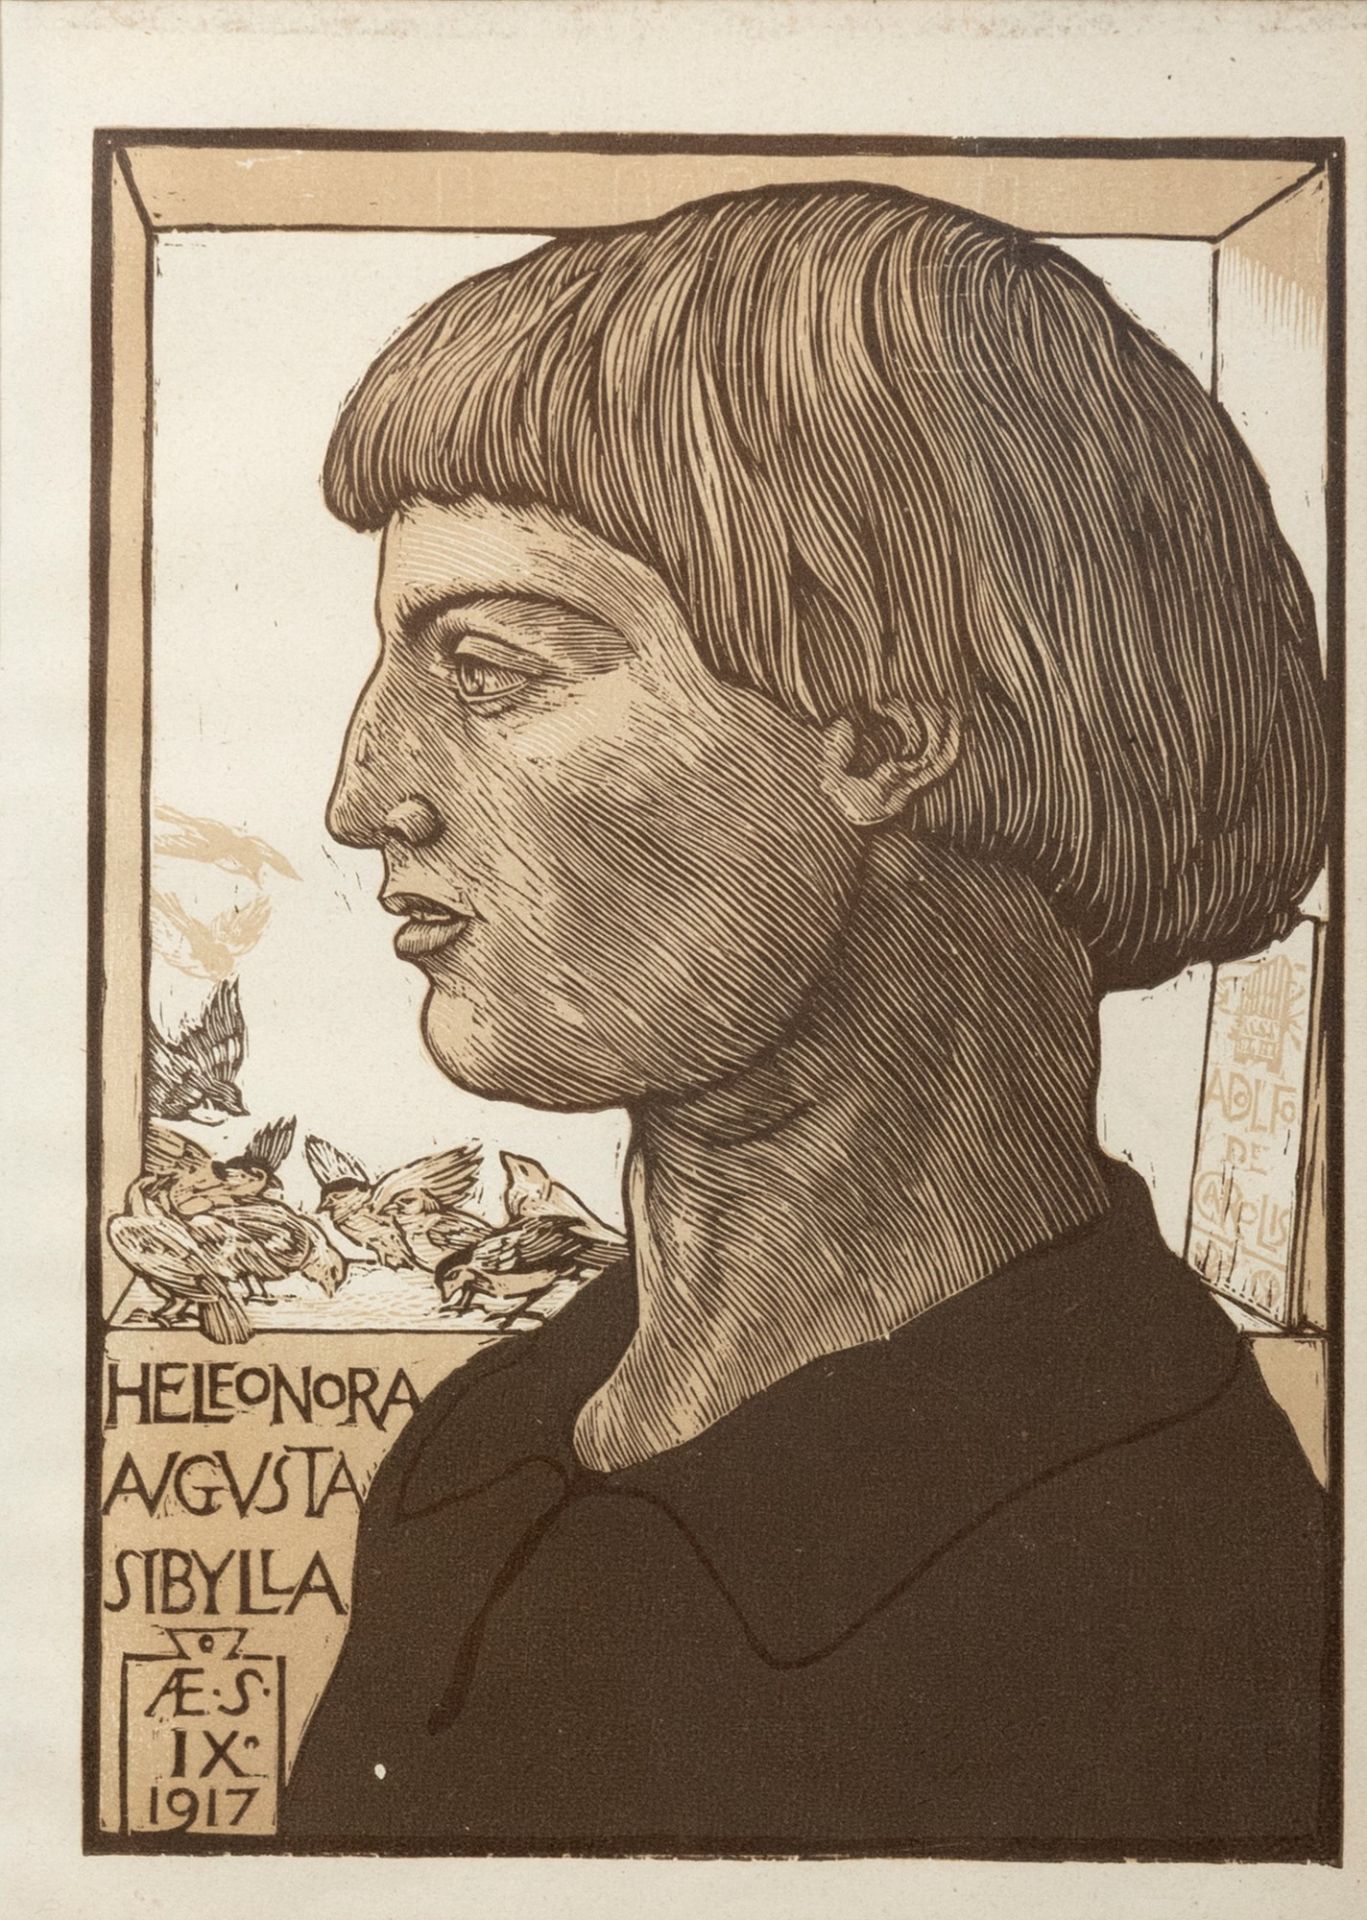 Adolfo de Carolis (Montefiore dell'Aso 1874-Roma 1928) - Heleonora Augusta Sibylla, 1917